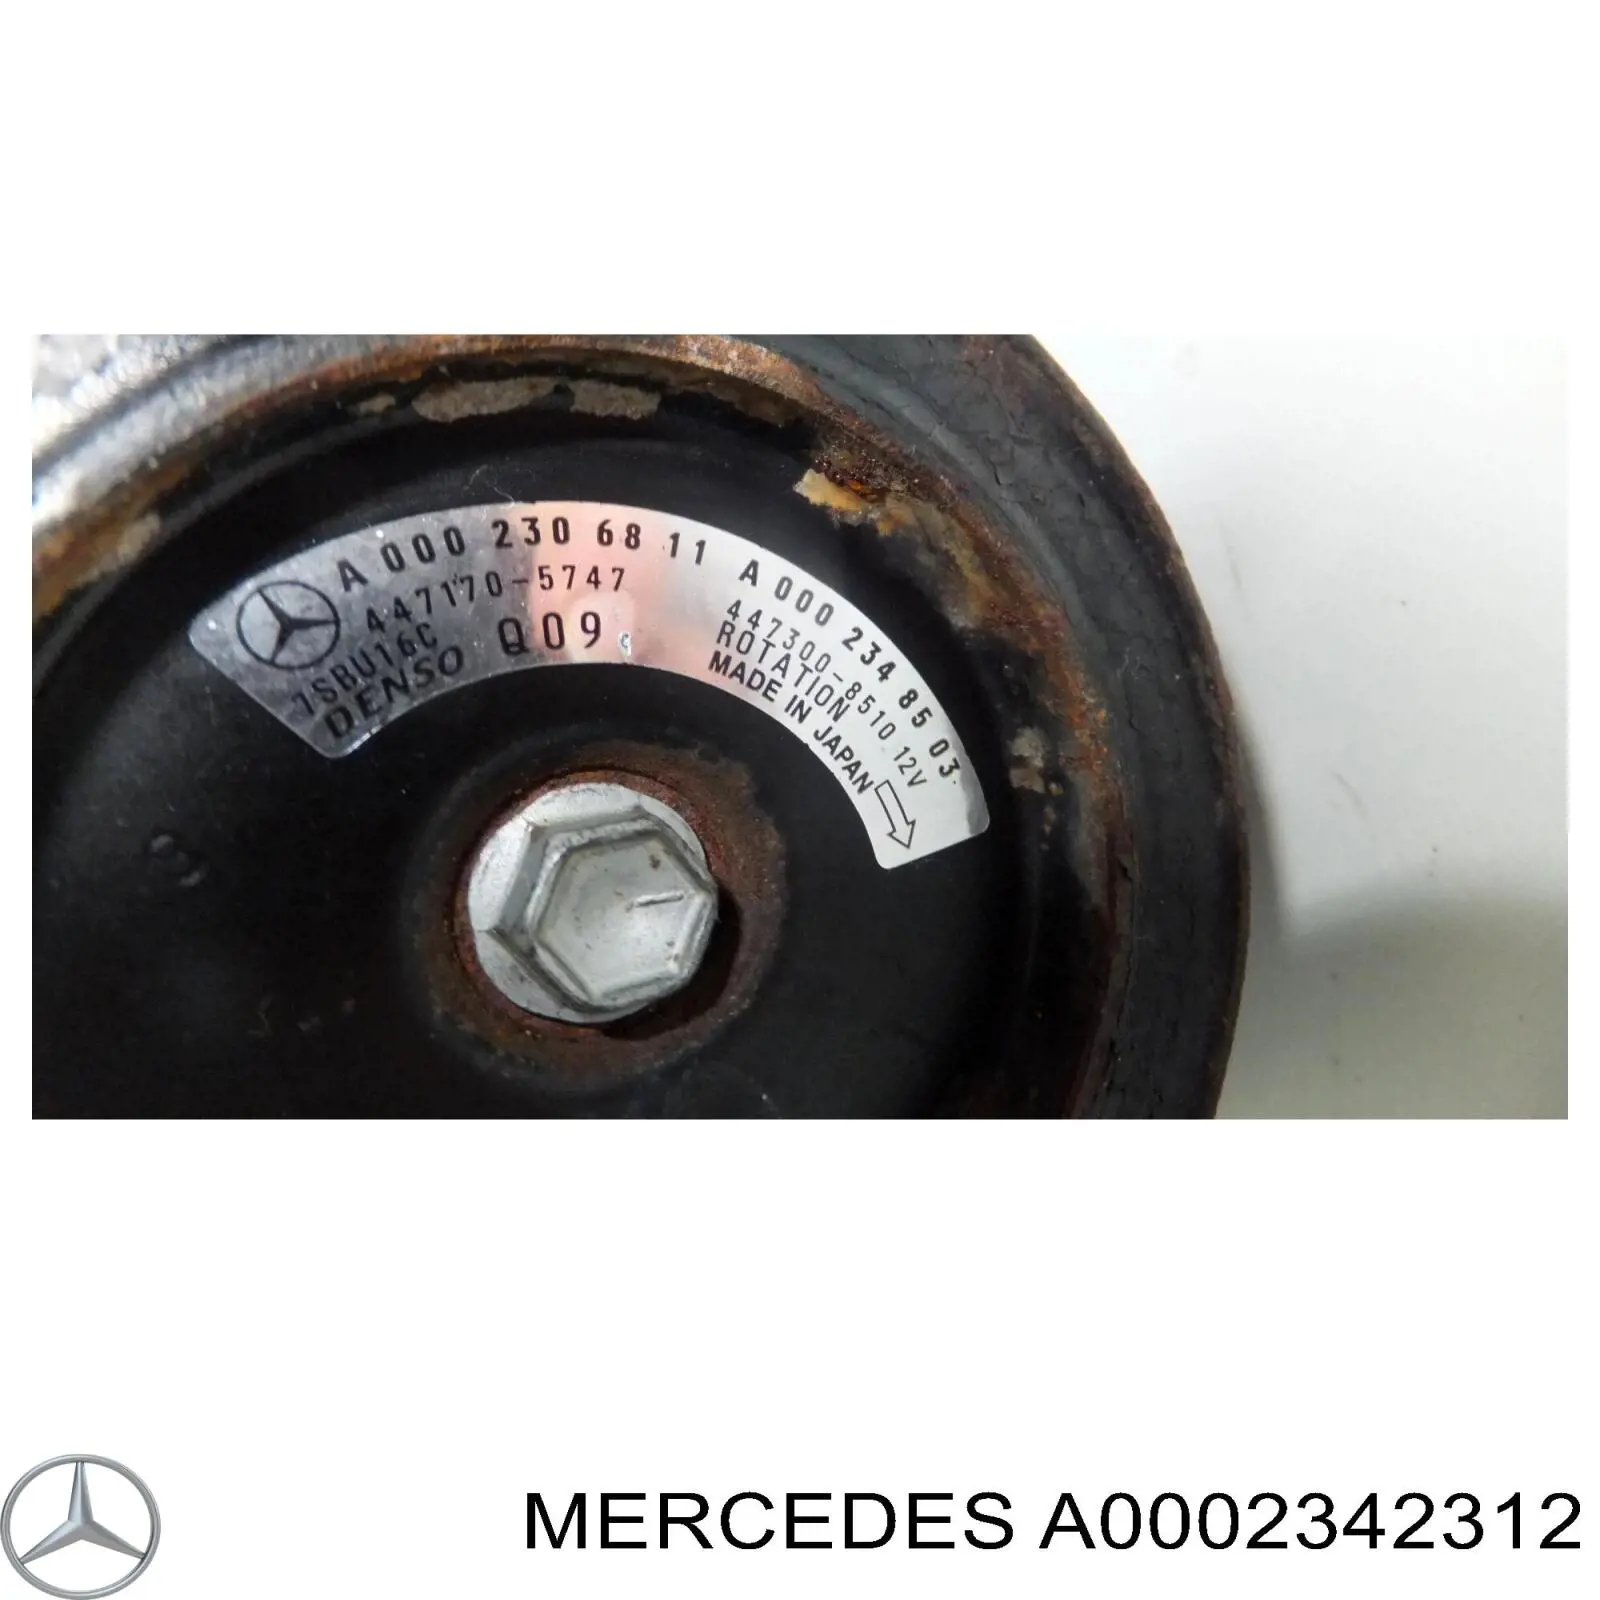 A0002342312 Mercedes compresor de aire acondicionado